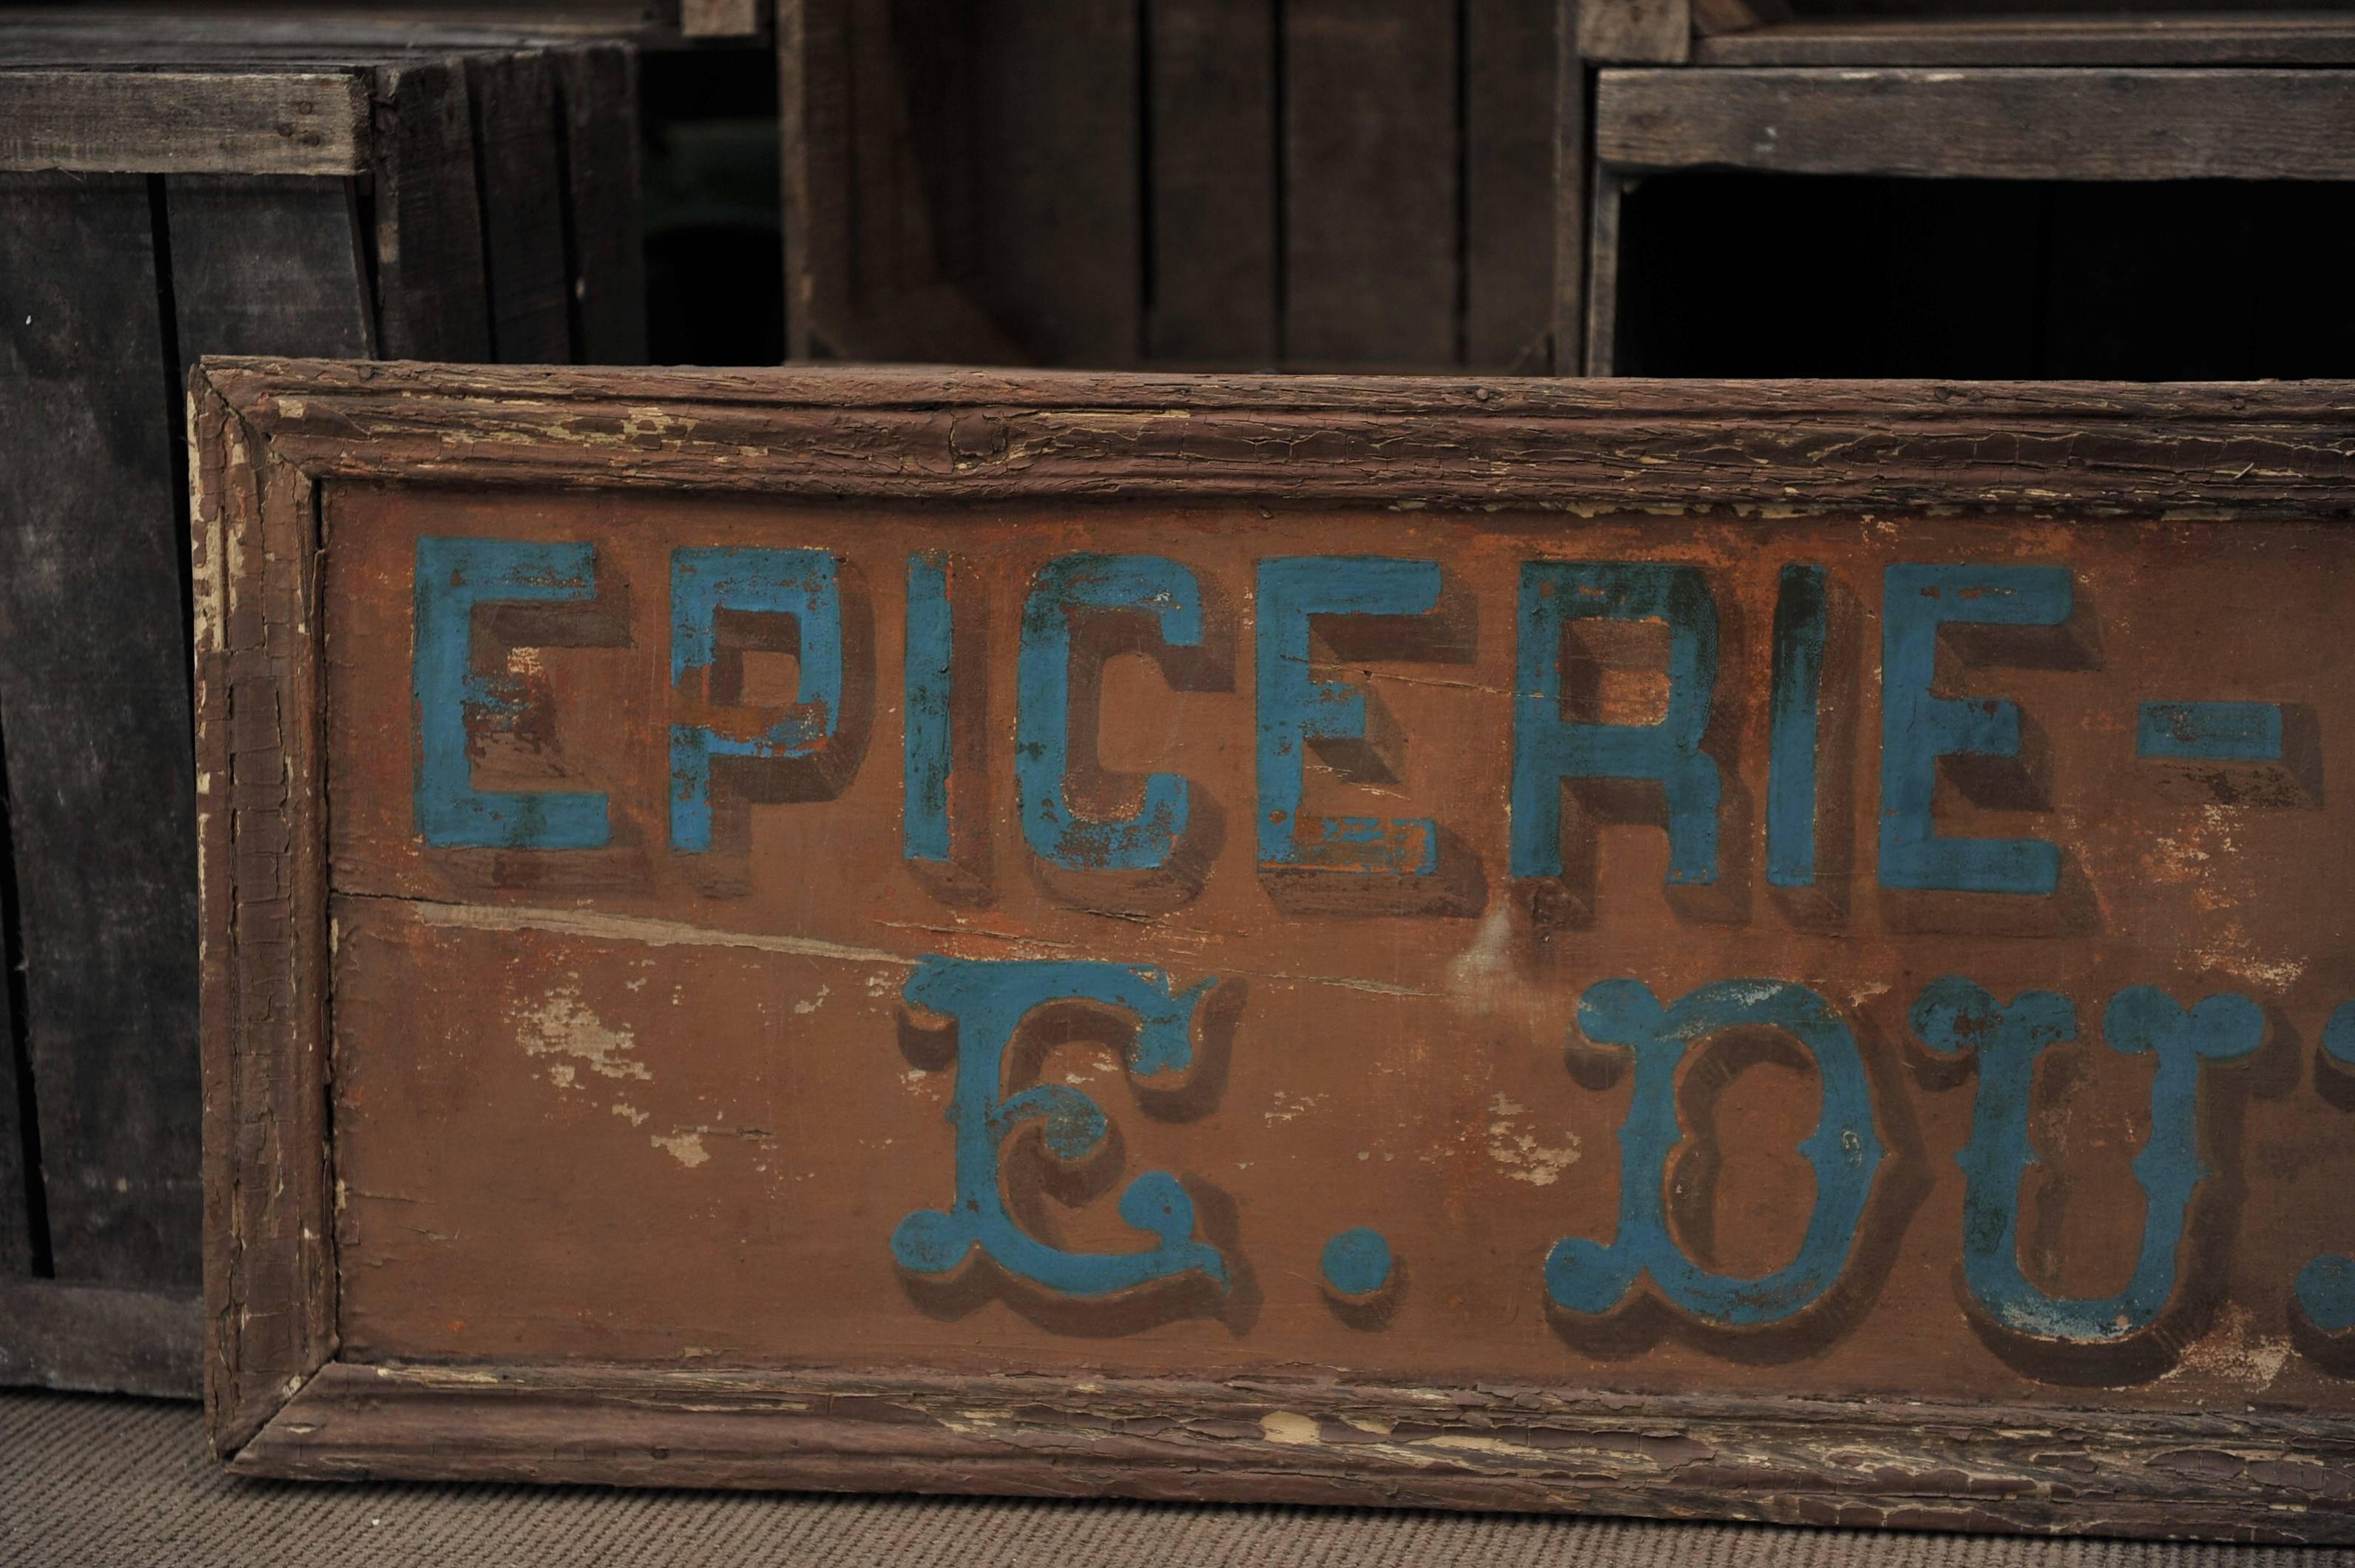 Vintage wood sign: Epicerie - Graines E.DUBAT (Local Greengrocery Seeds Shop), original patina 1930s.